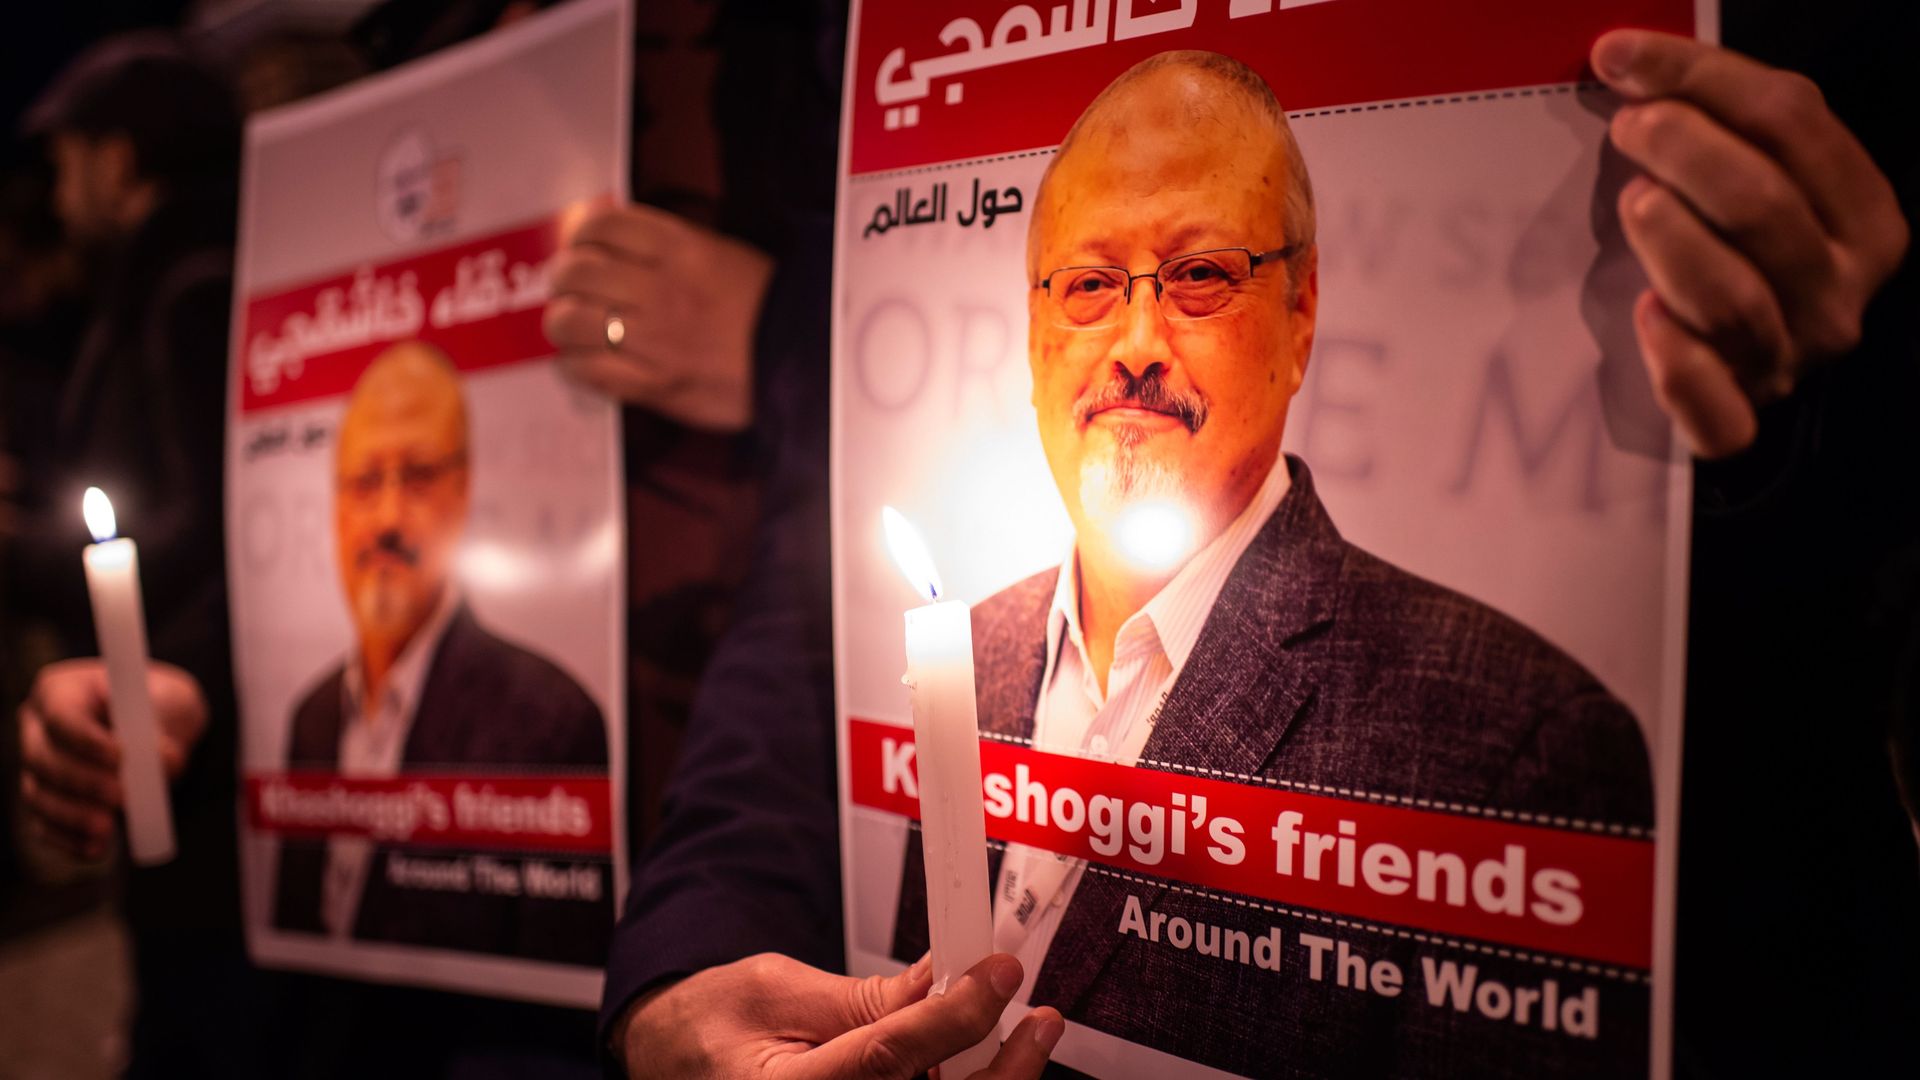 Jamal Khashoggi on a poster next to a candle.